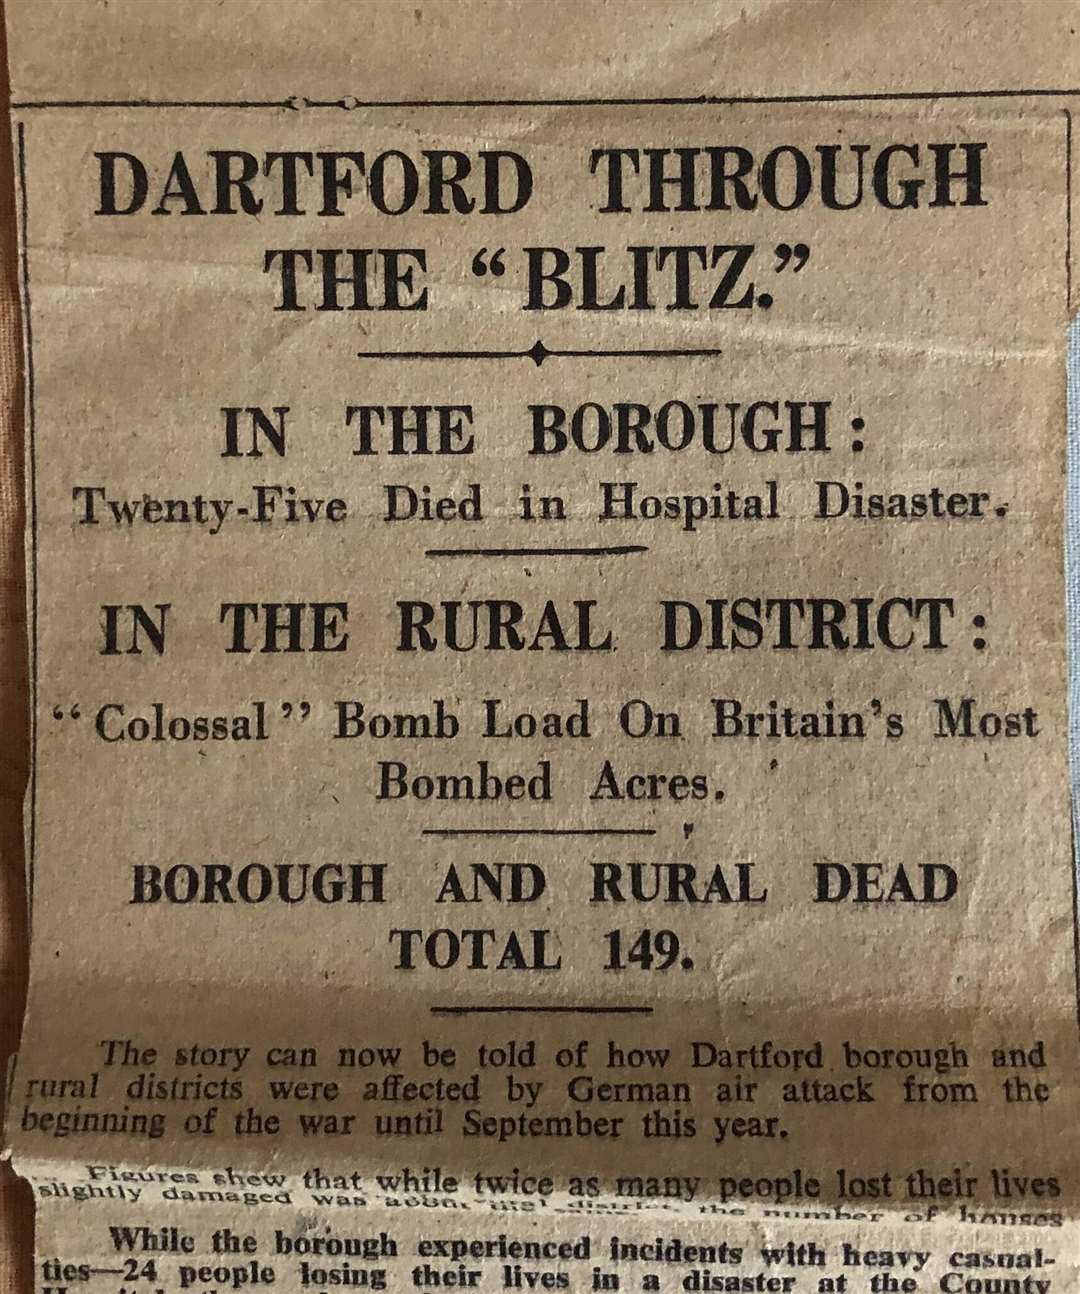 A newspaper cutting on Dartford through The Blitz